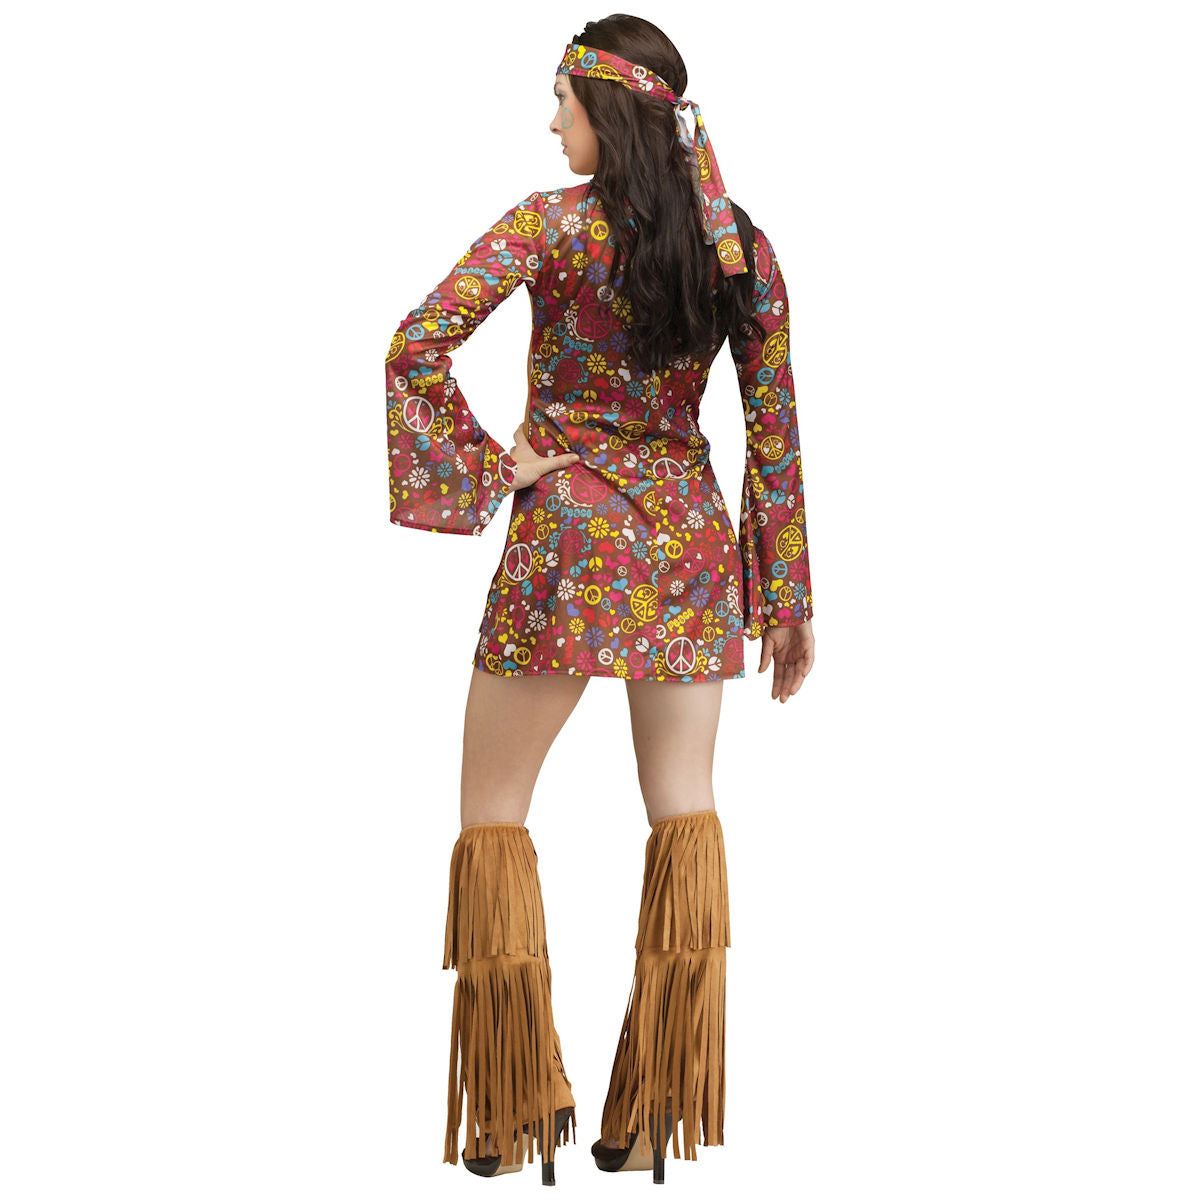 Hippie Flower Power Ladies Fancy Dress Costume